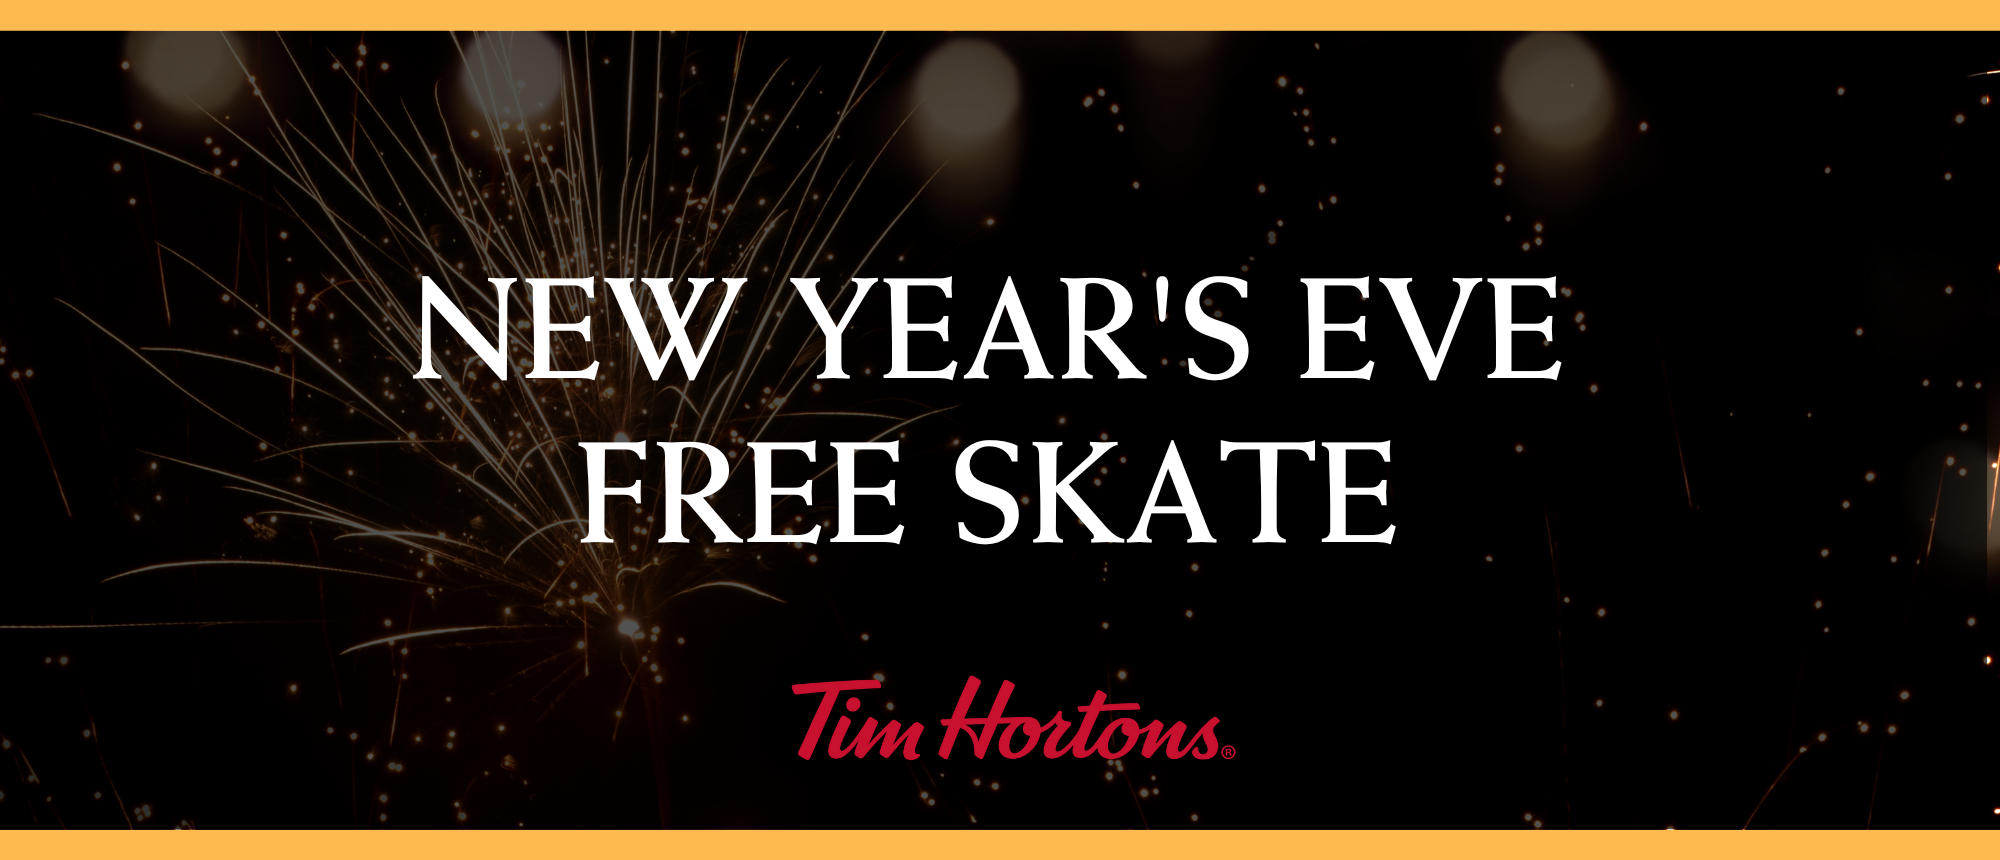 Tim Hortons New Year's Eve Skate